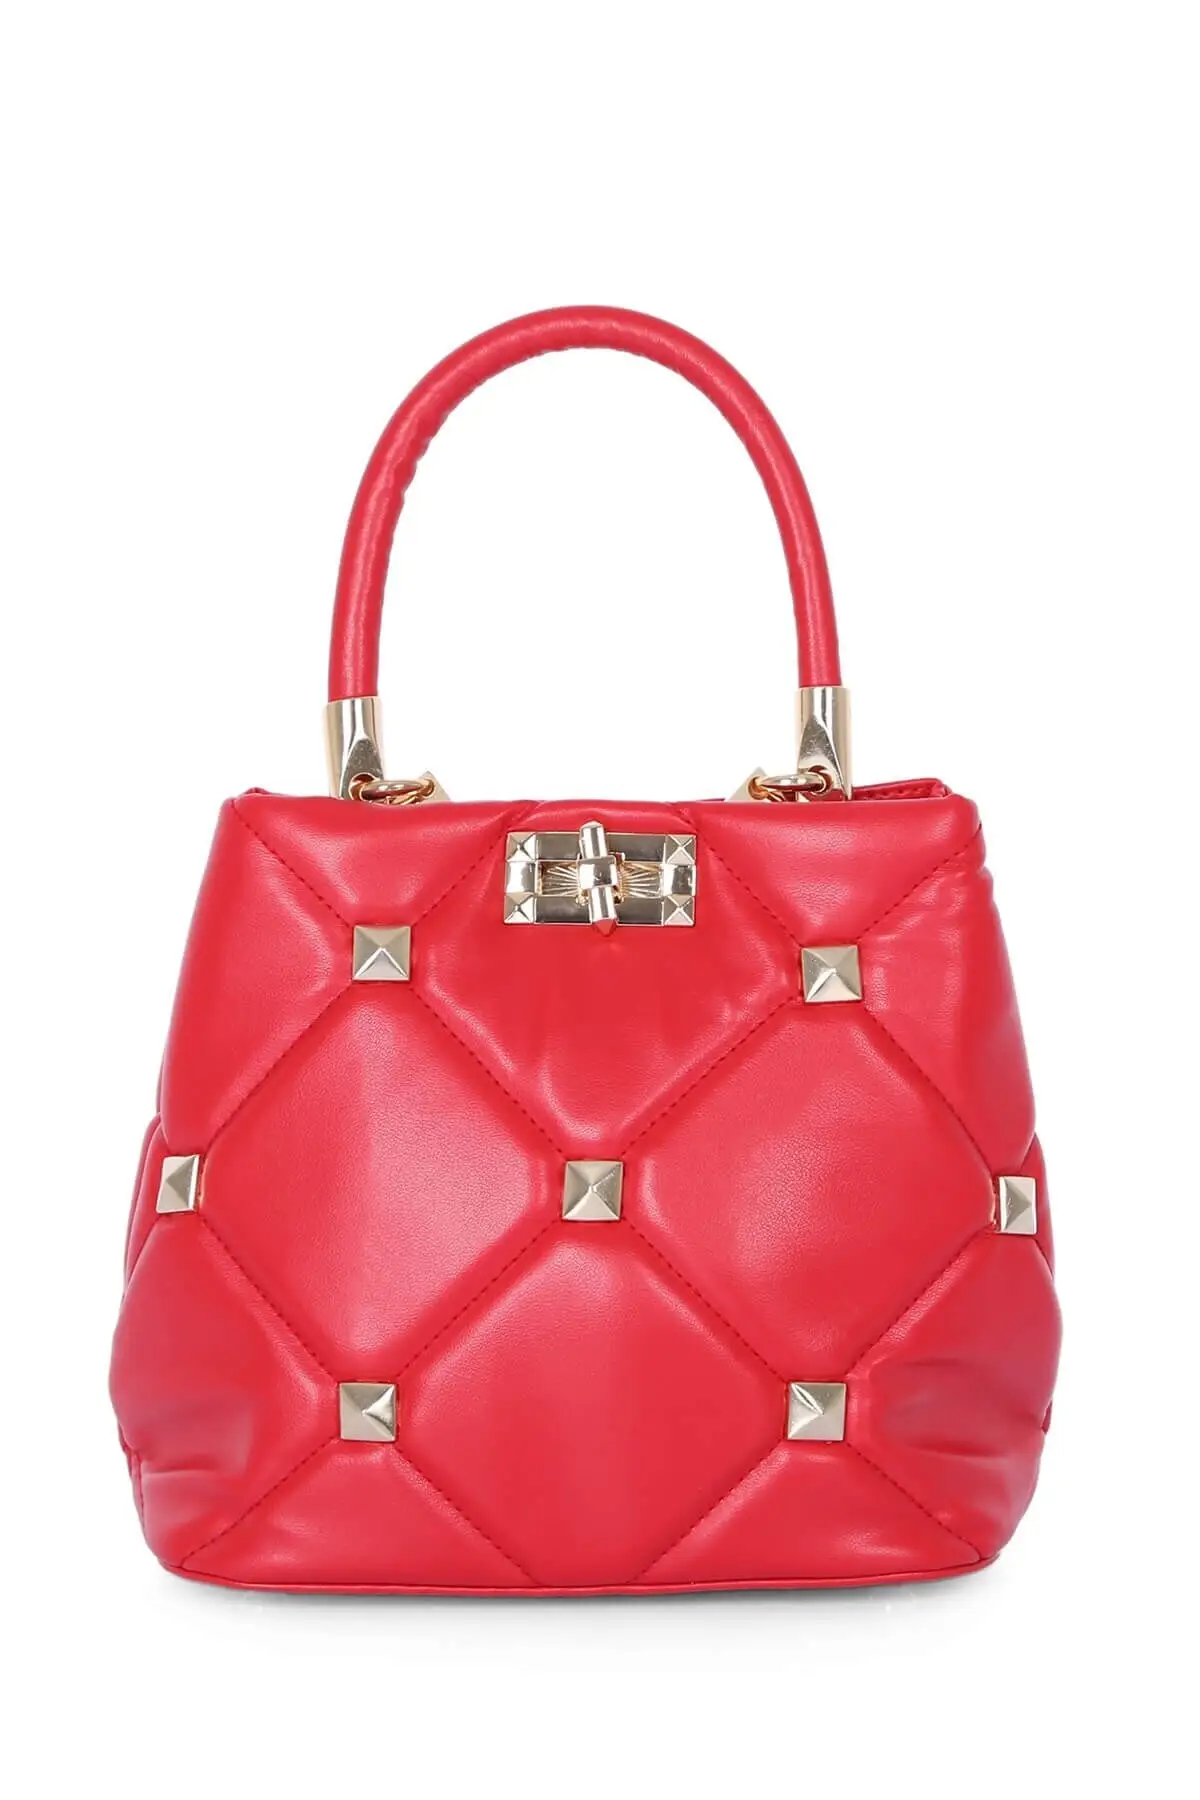 women's handbag stylish accessory and lock closure new season fashion daily use vibrant color